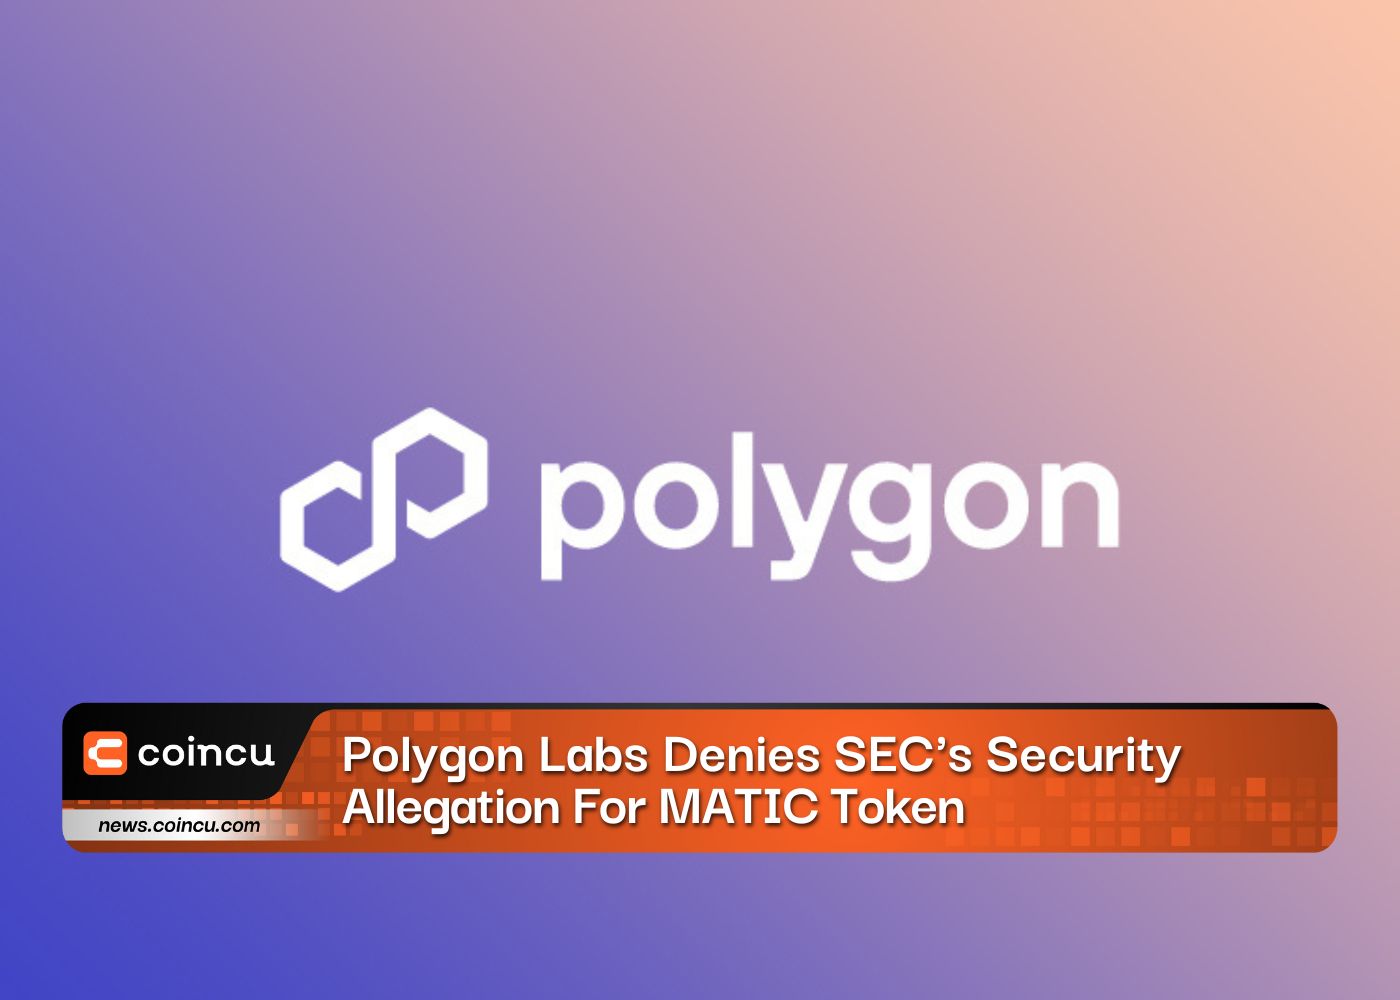 Polygon Labs Denies SECs Security